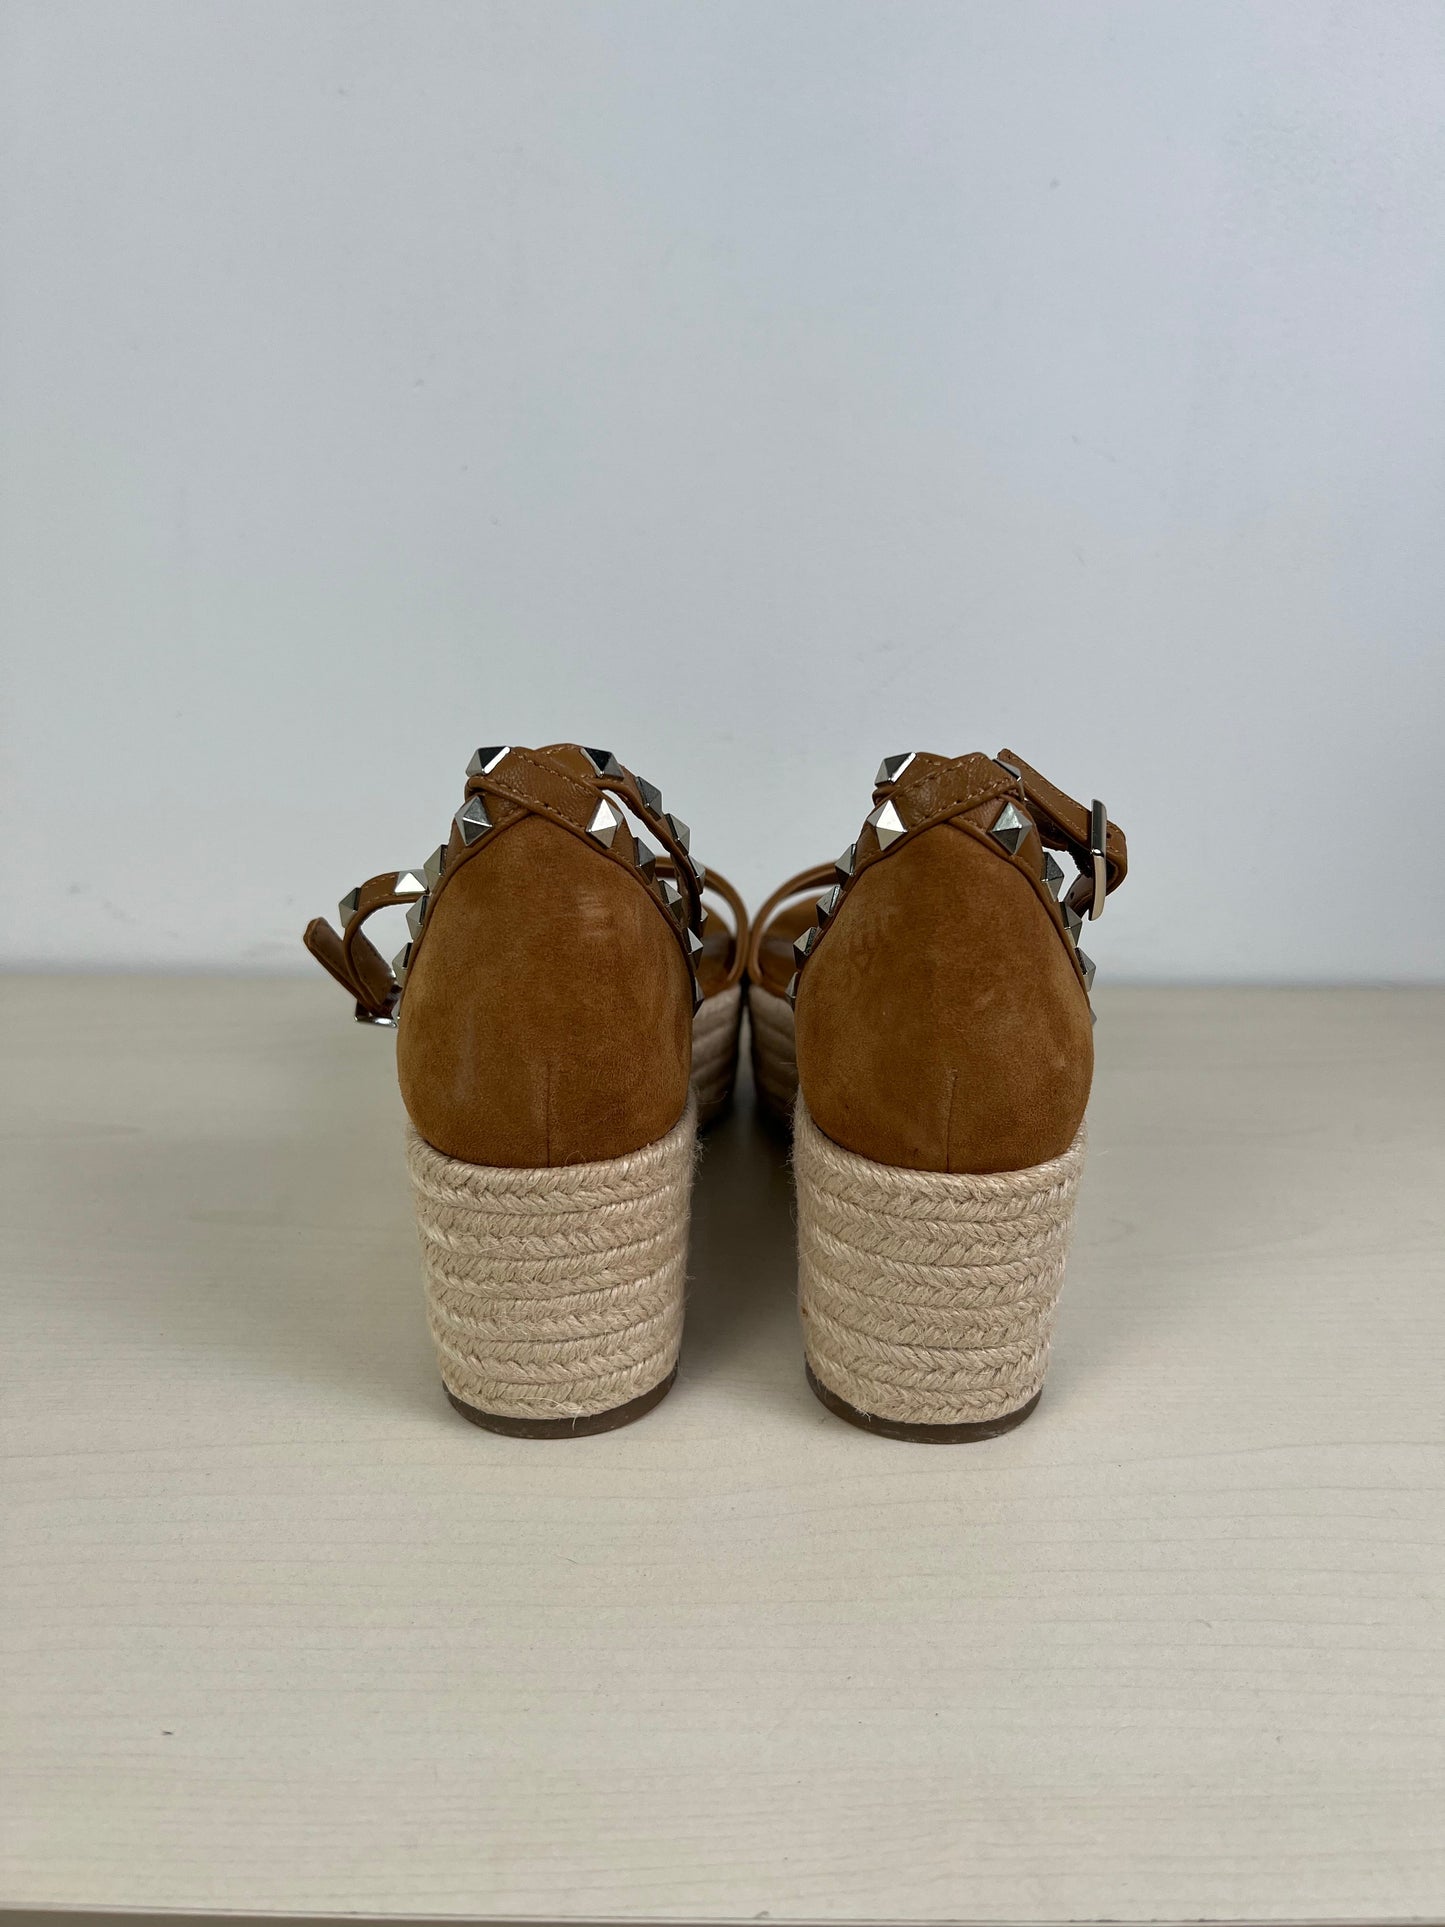 Tan Sandals Heels Platform Marc Fisher, Size 7